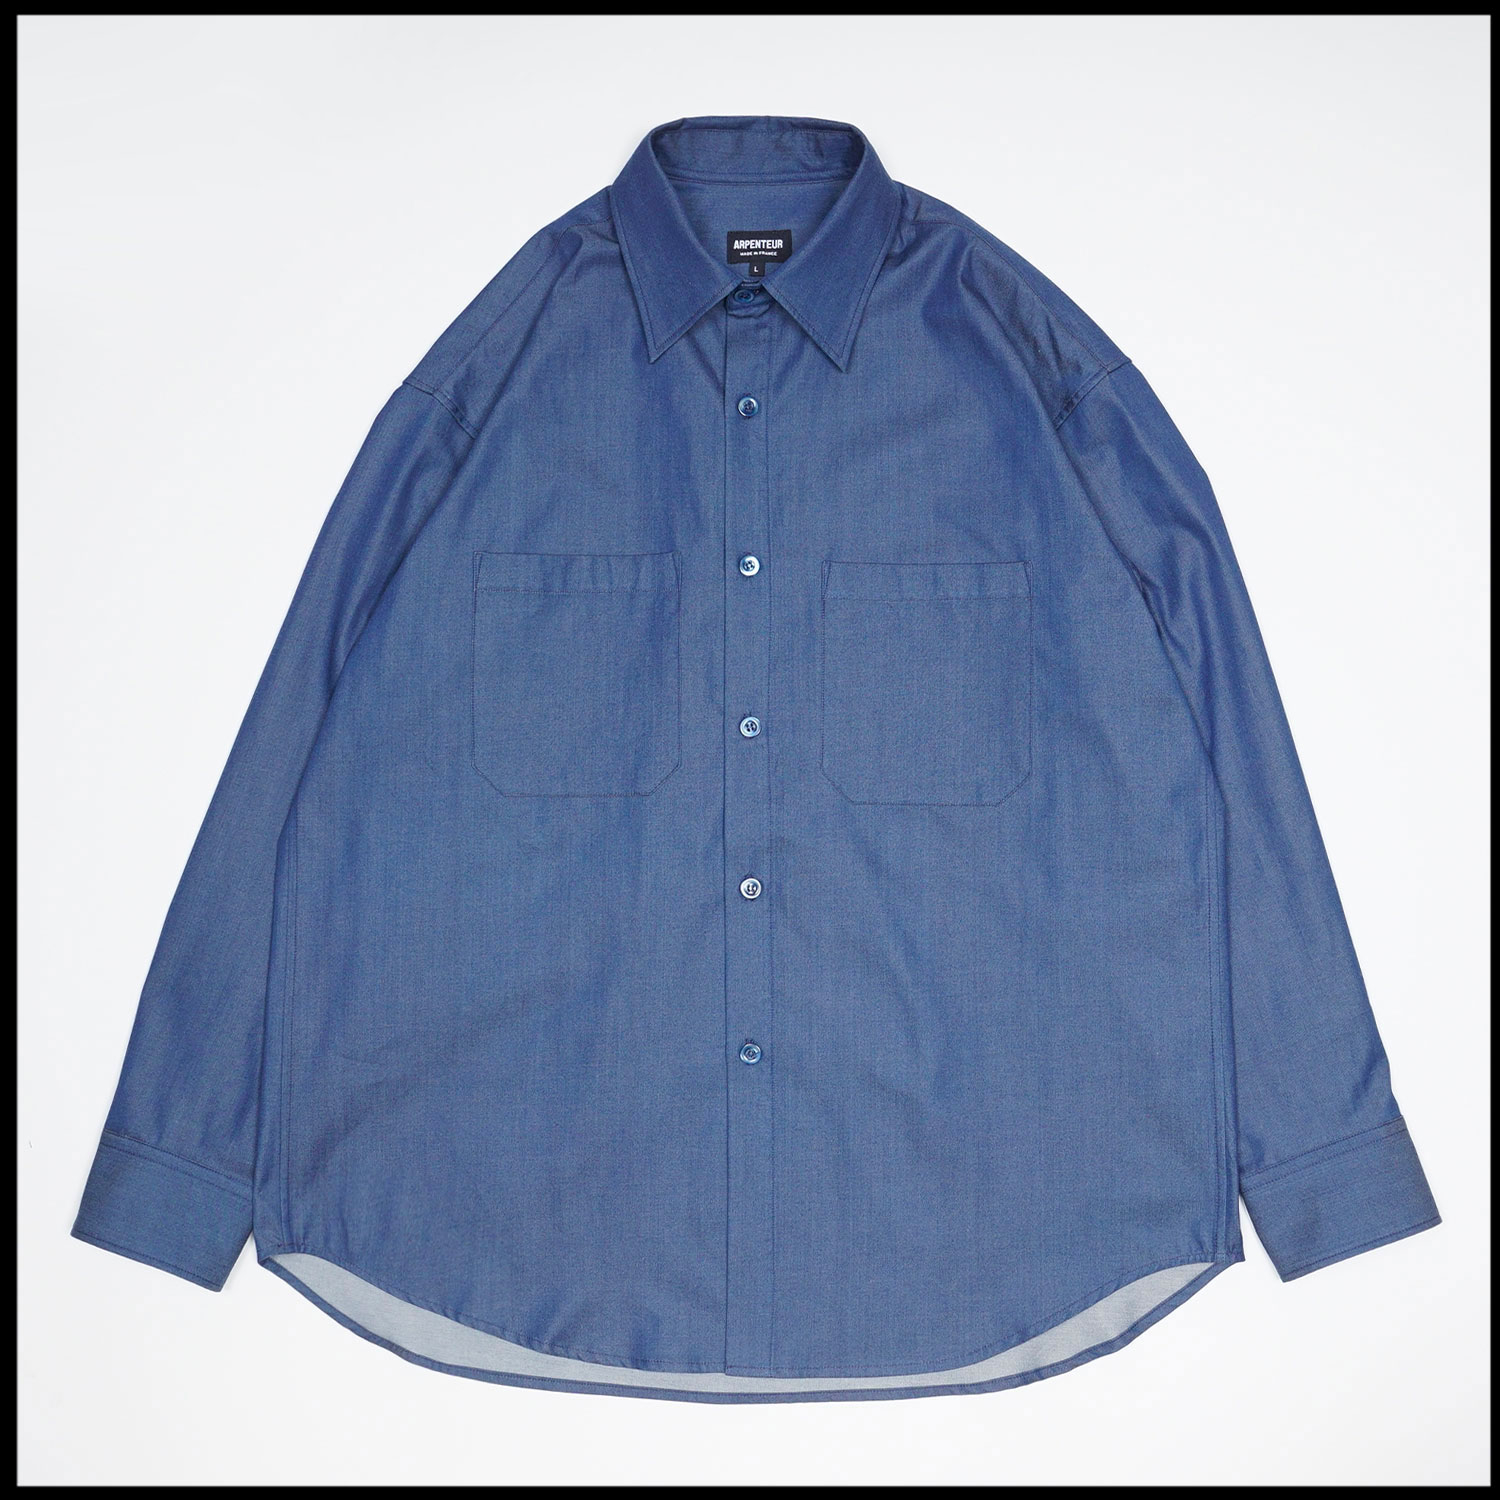 DORIS shirt in Indigo blue color by Arpenteur